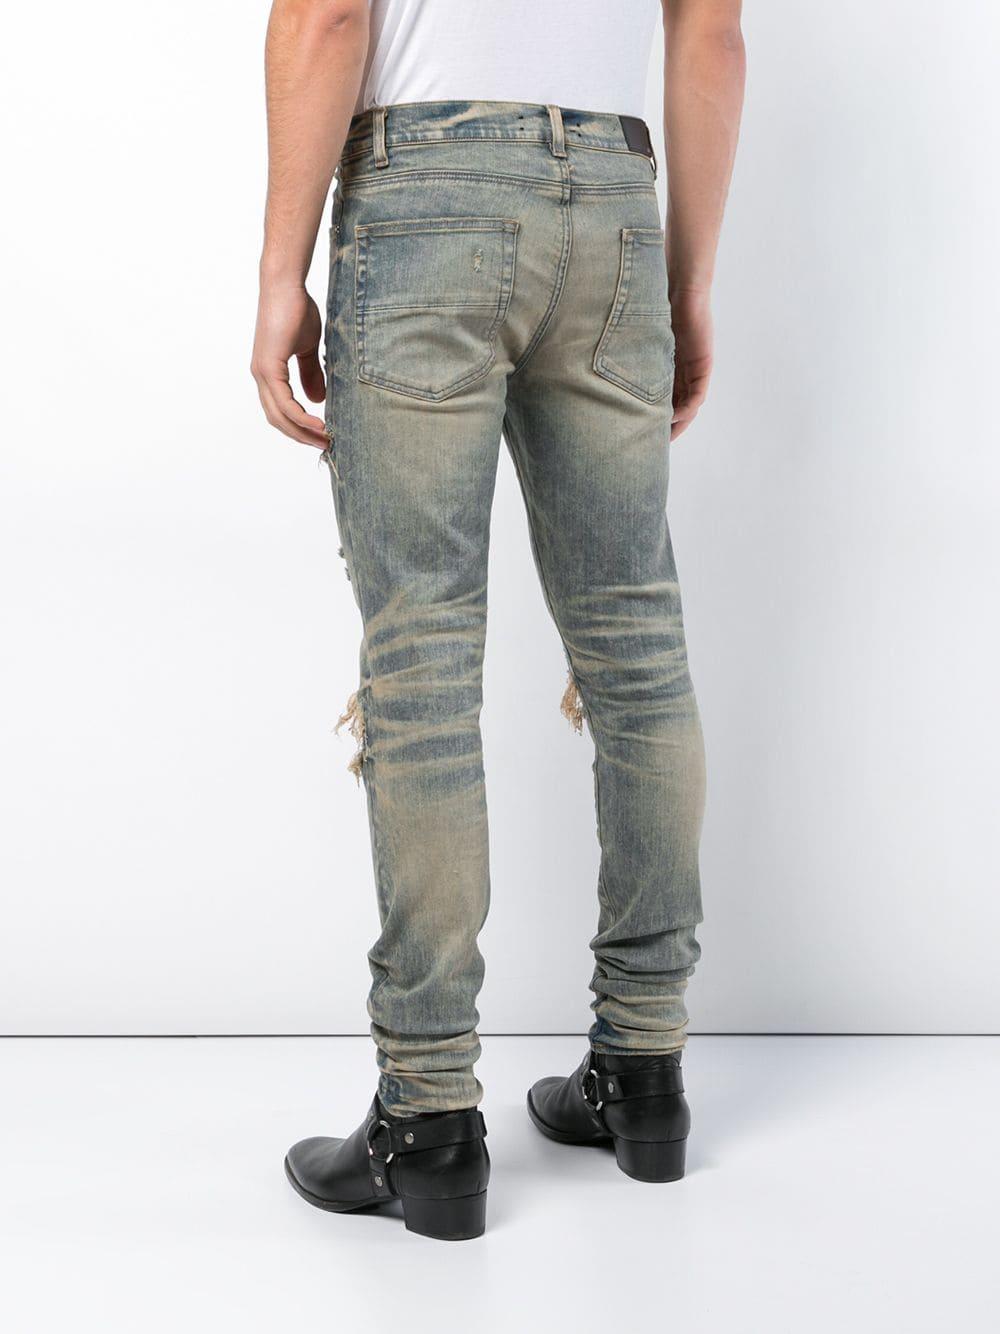 Amiri Denim Mx1 Ripped Bandana Jeans in Blue for Men - Lyst